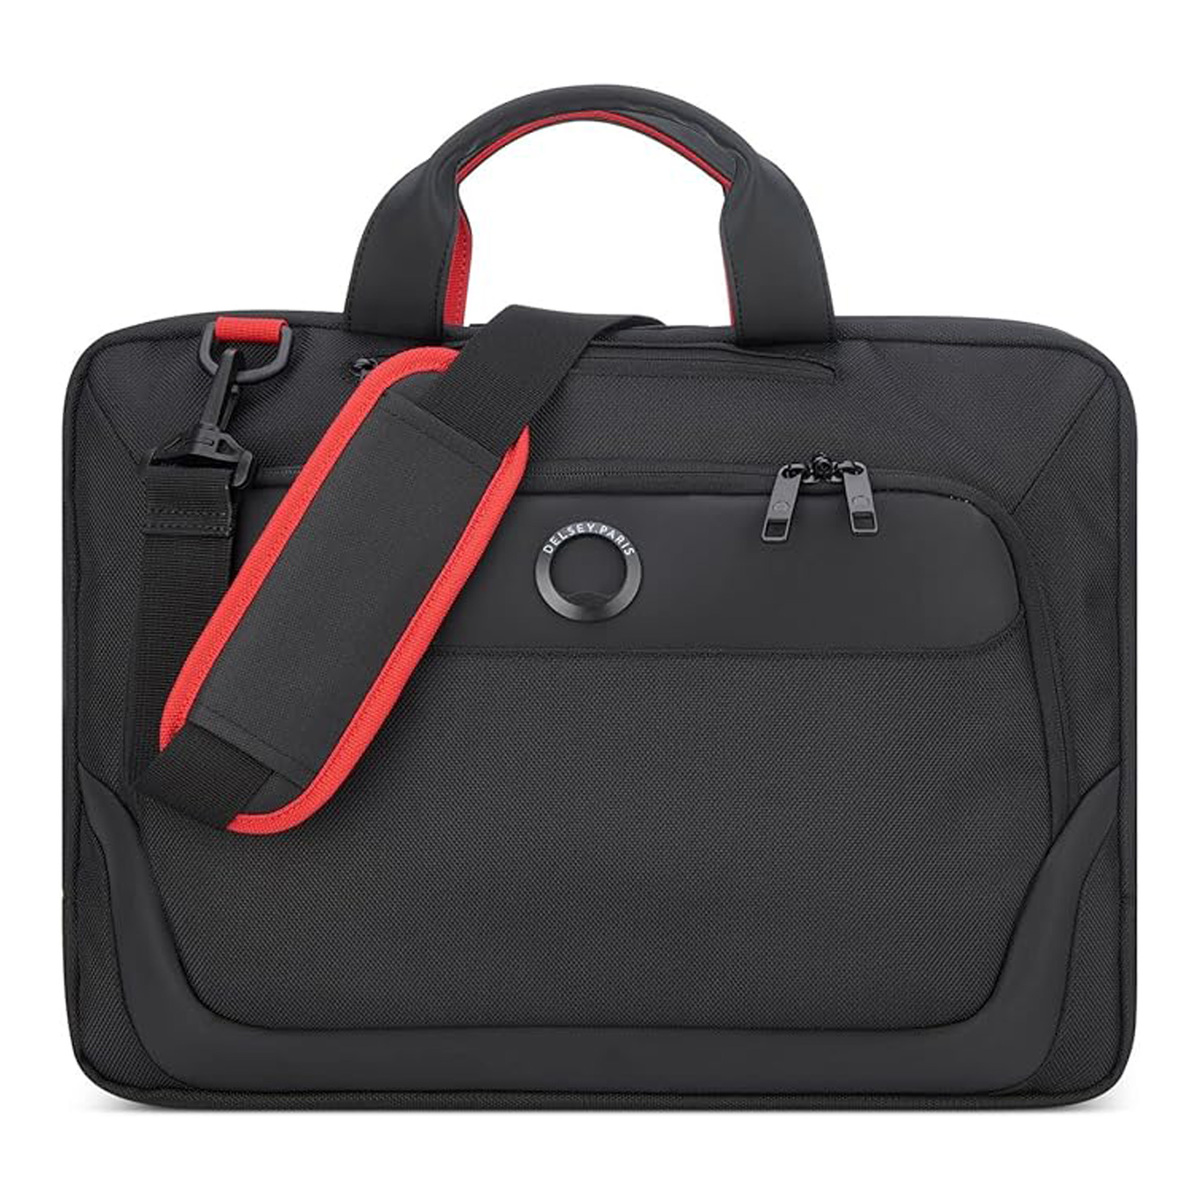 Delsey Laptop Bag, 15.6 inches, Black, 3944161